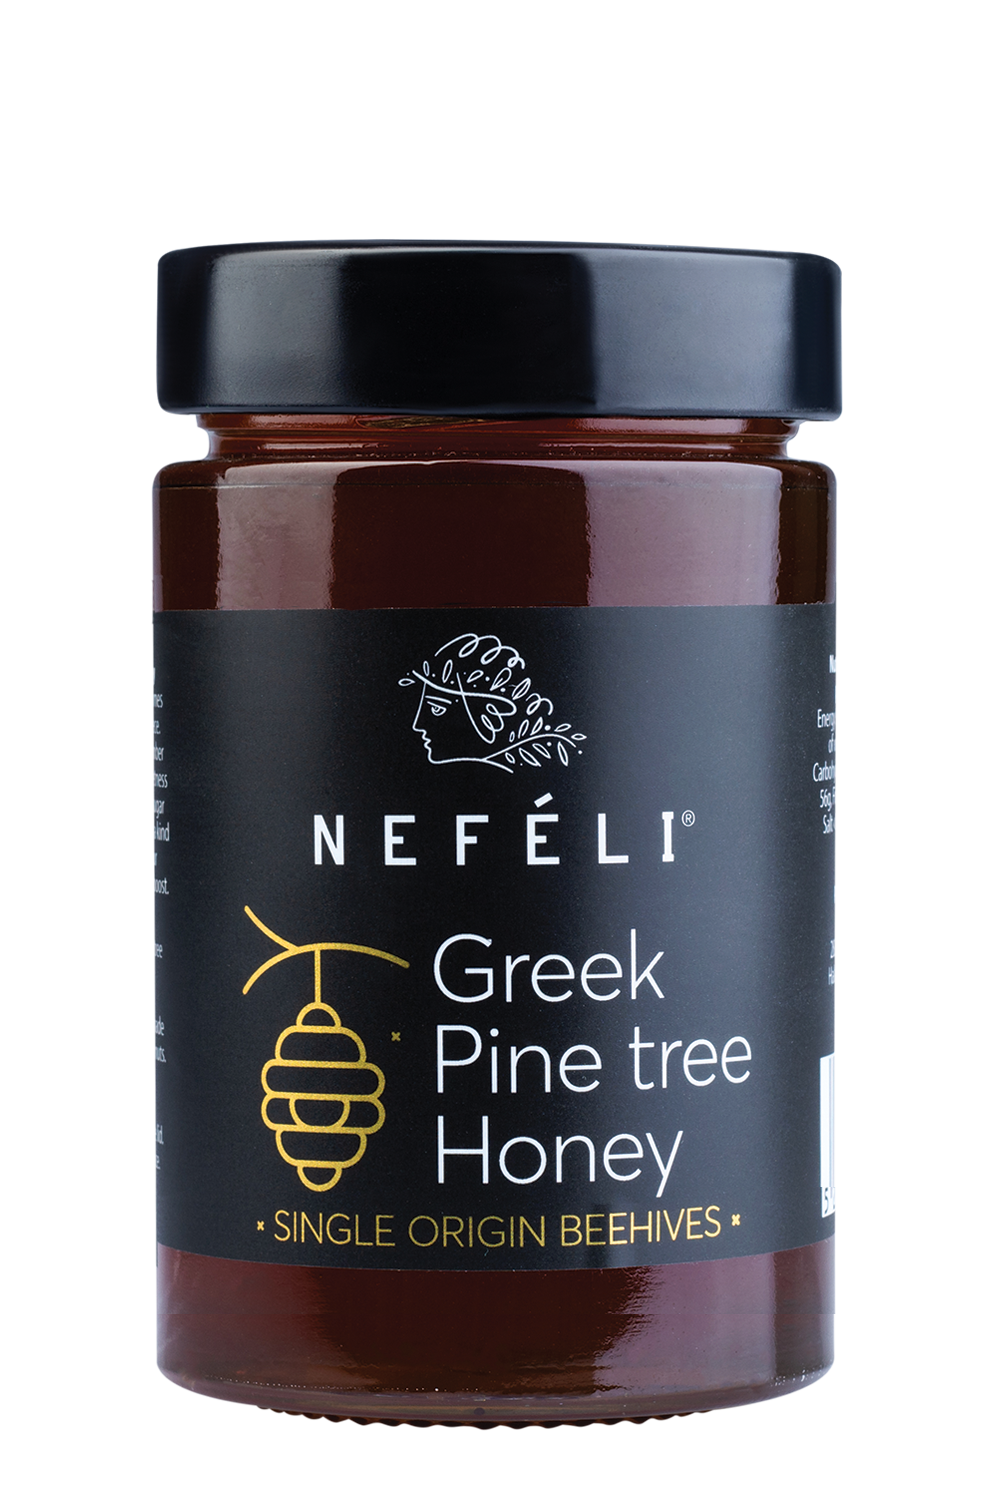 Greek pine tree honey